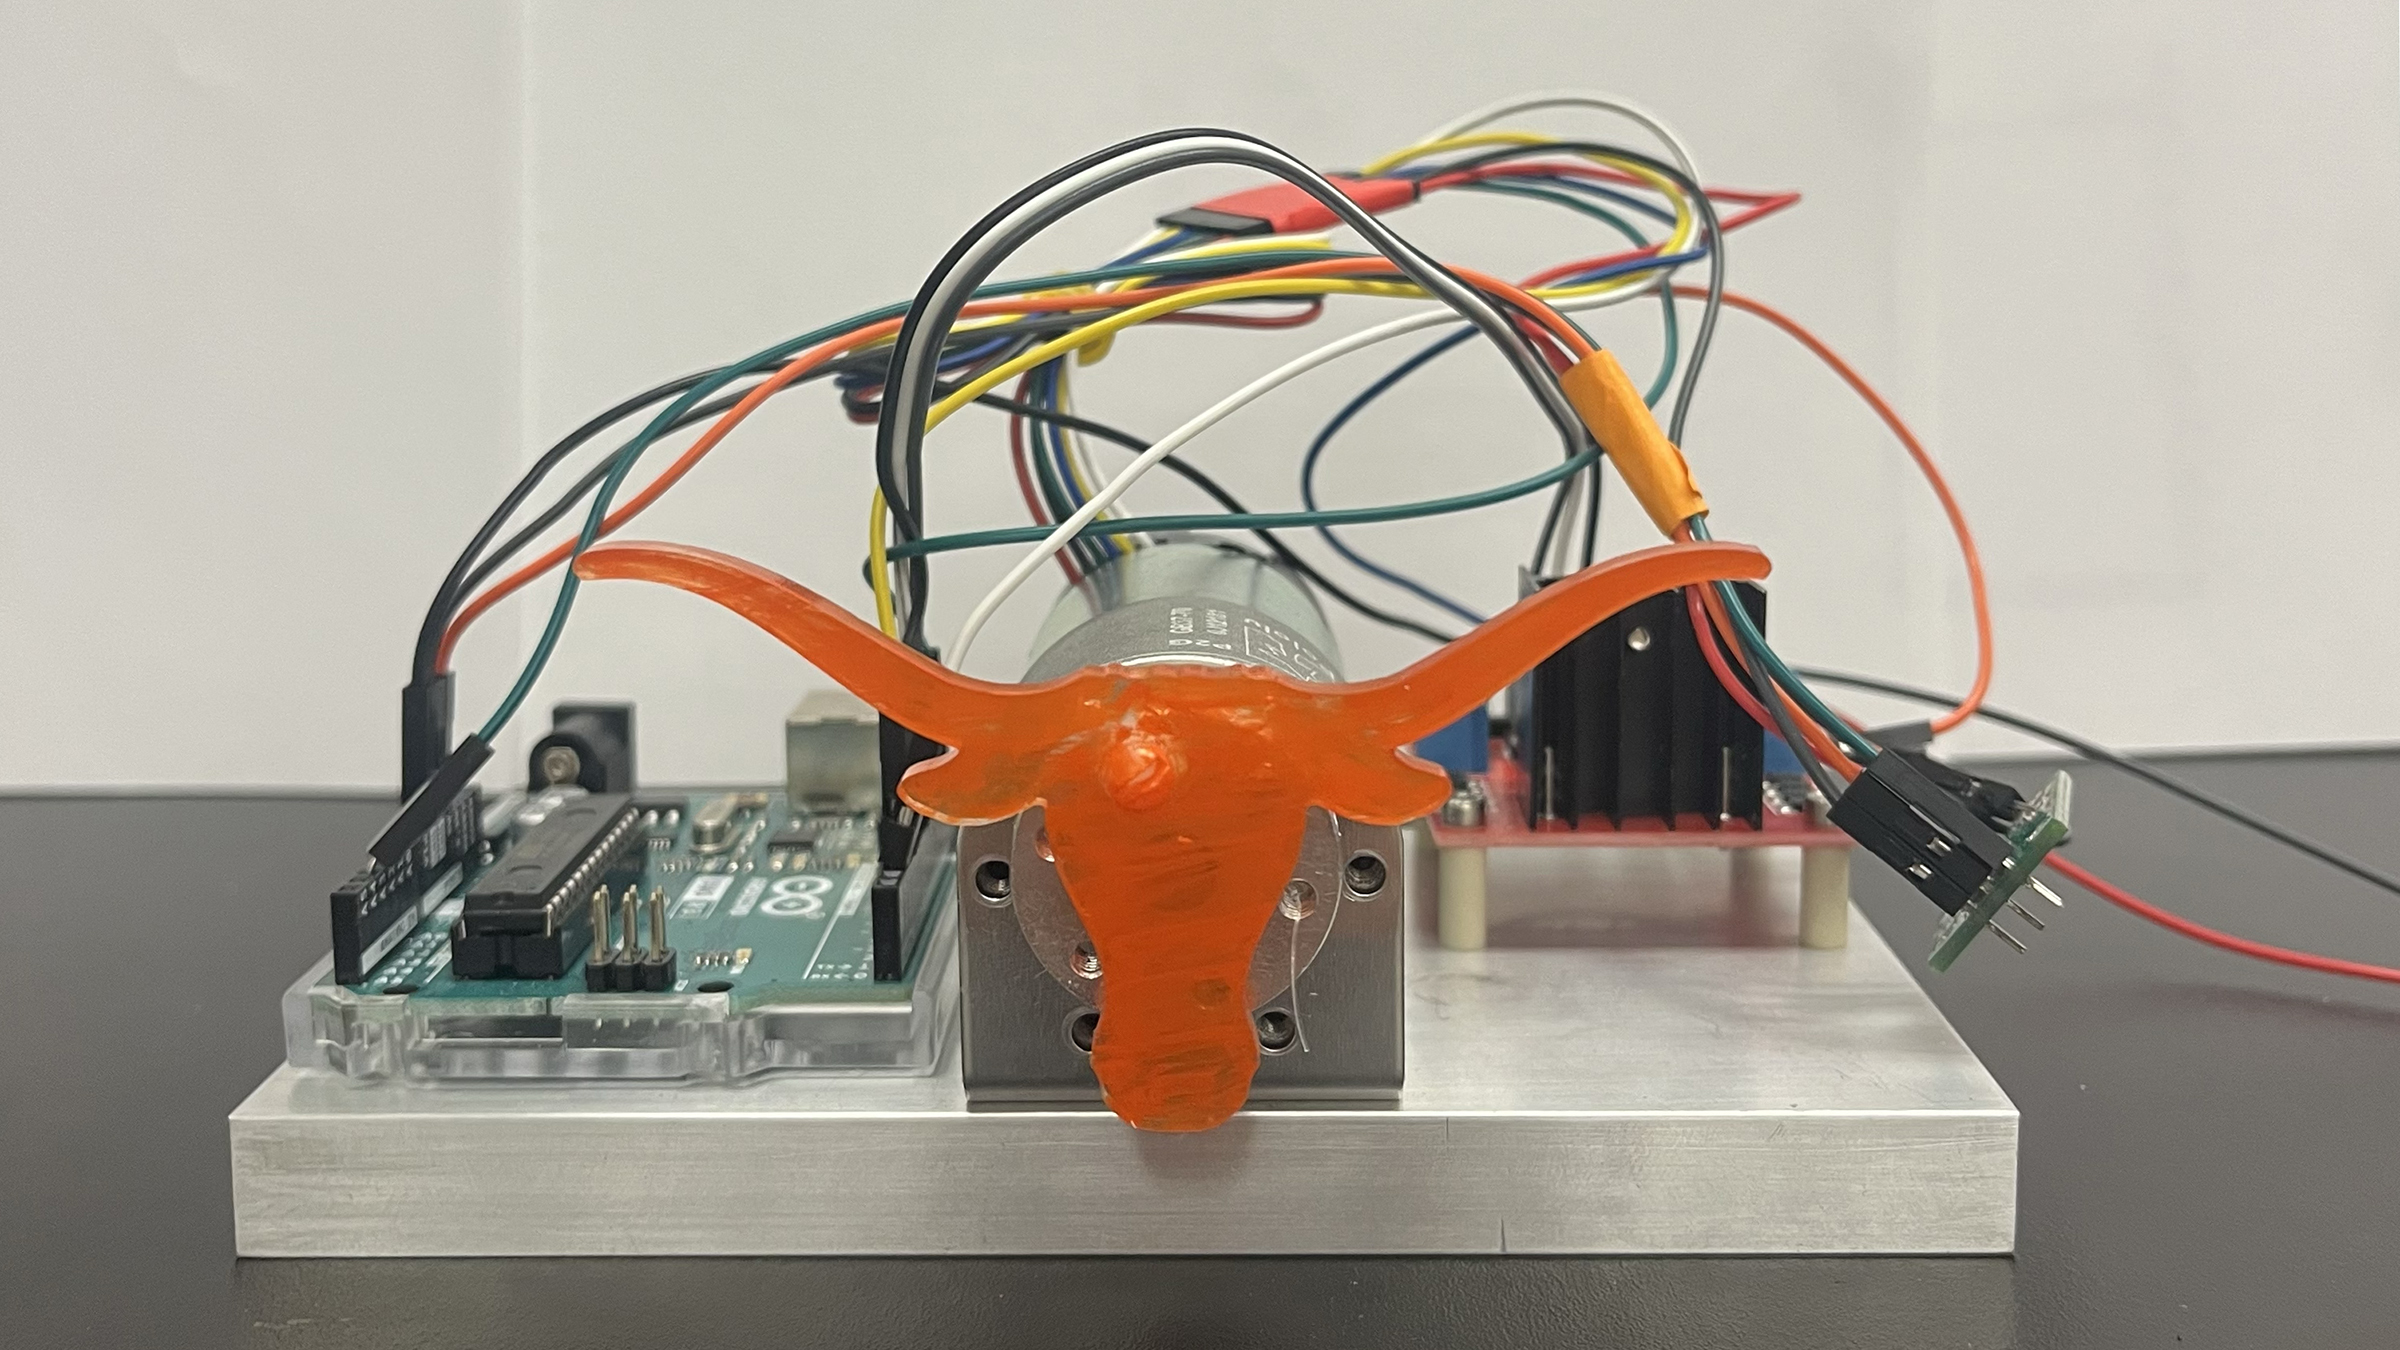 A motor with an orange longhorn logo 